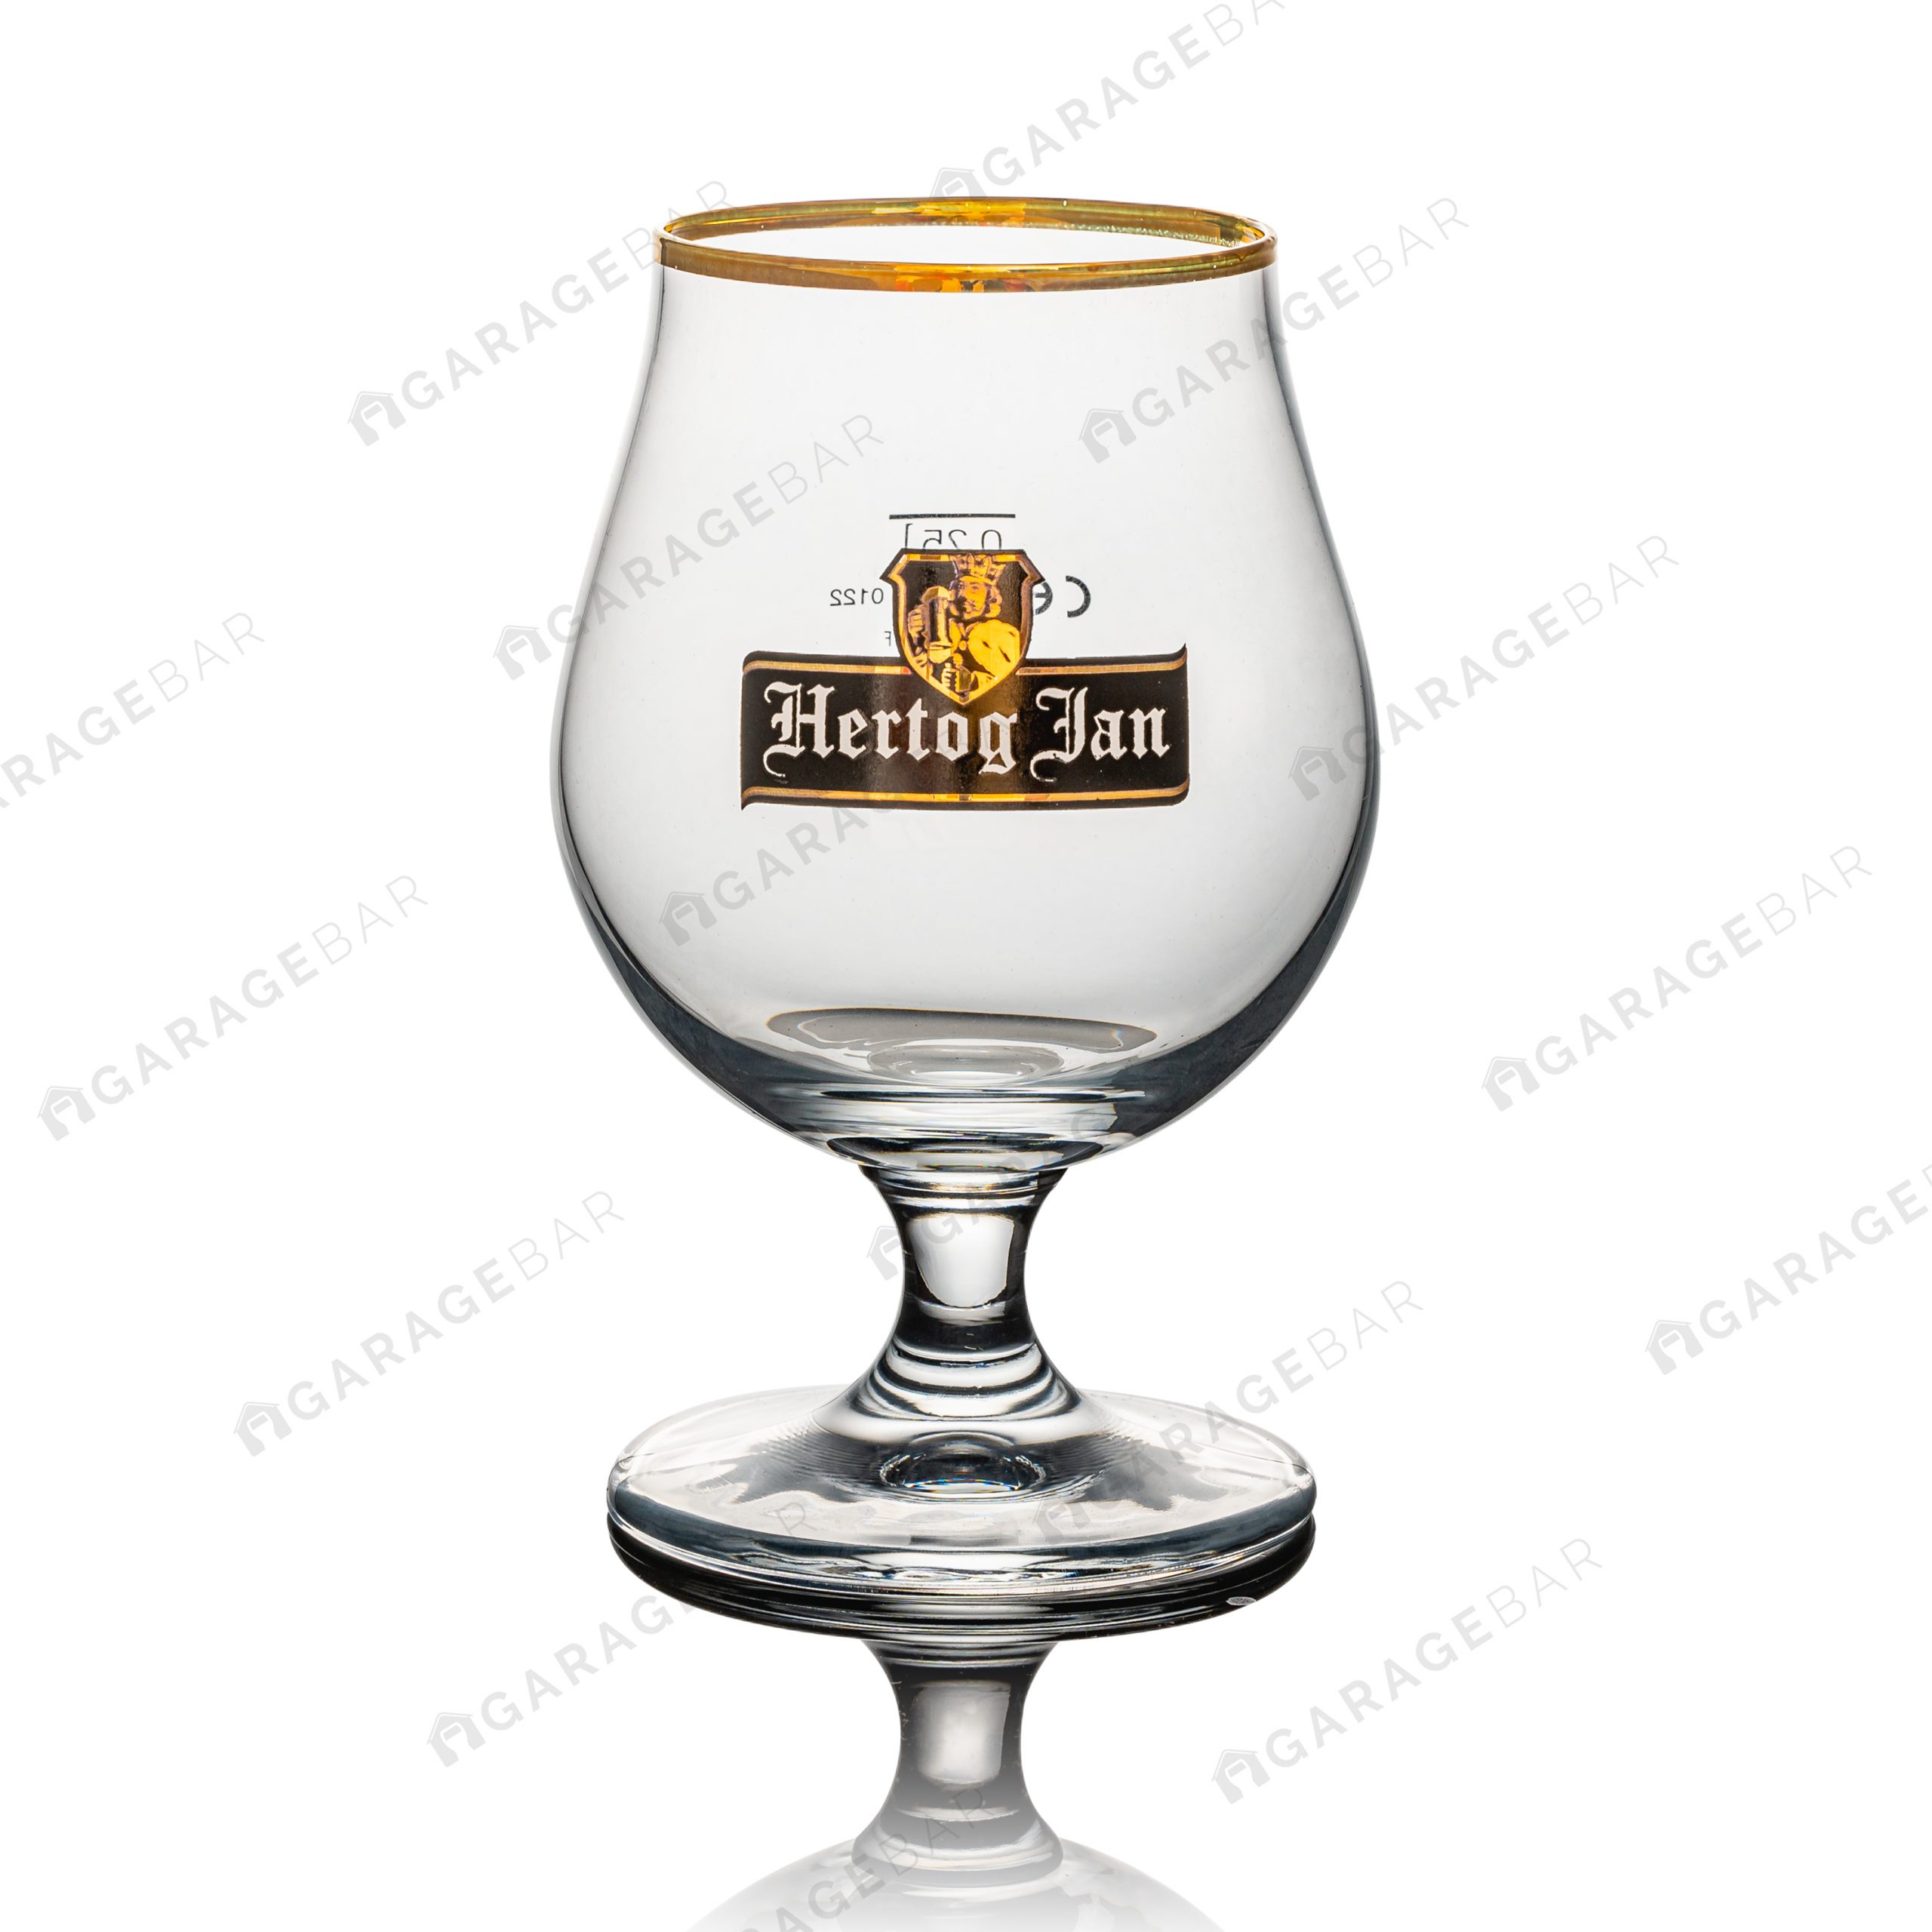 Hertog Jan Stemmed Beer Glass